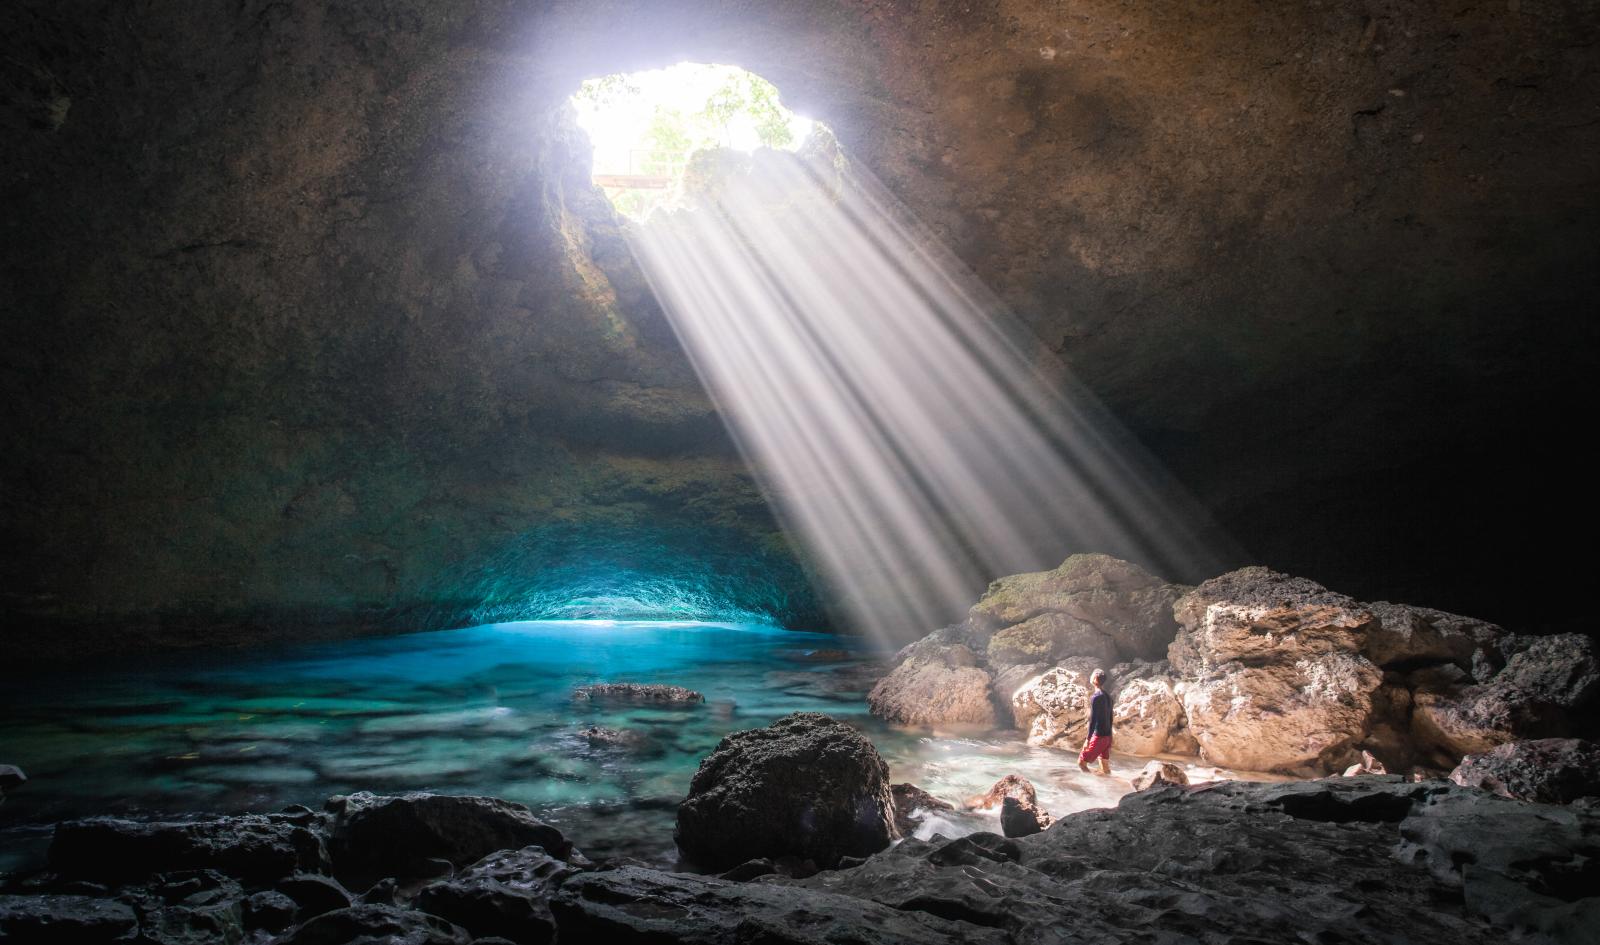 VTO - Tanna - Blue Cave (Joel Johnsson)